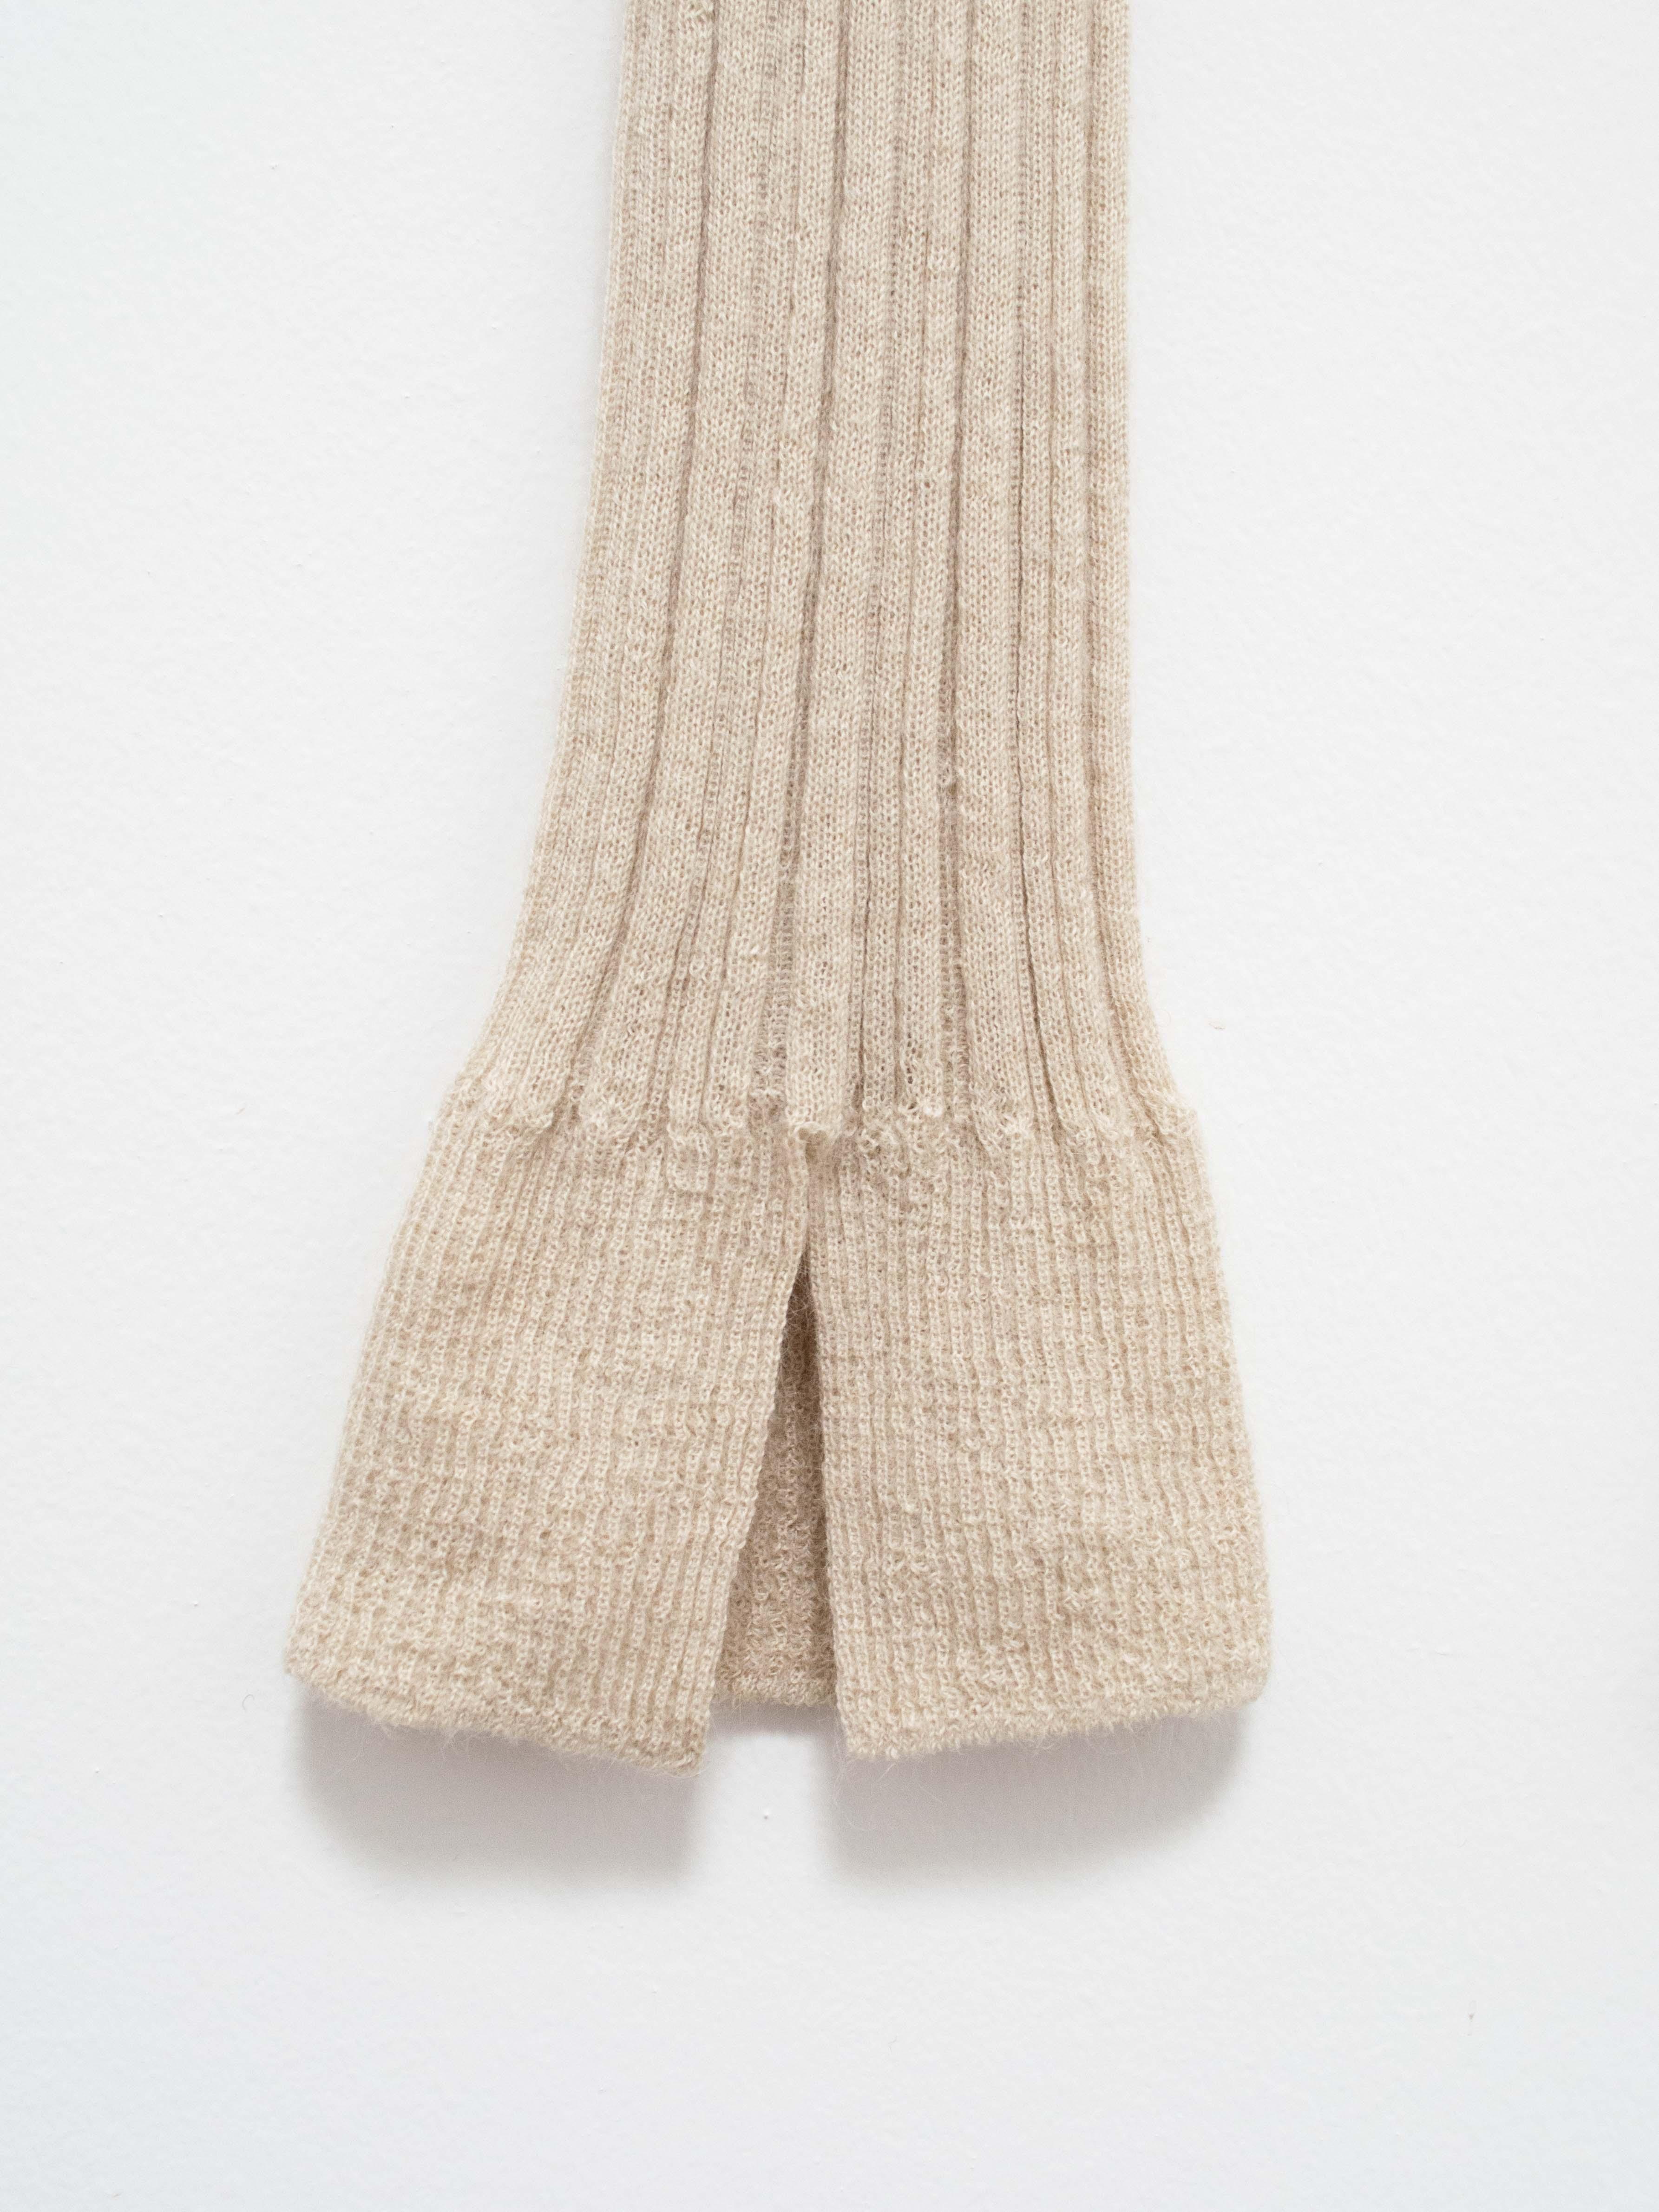 Namu Shop - Unfil Baby Suri Alpaca Ribbed Knit Leggings - Oyster White